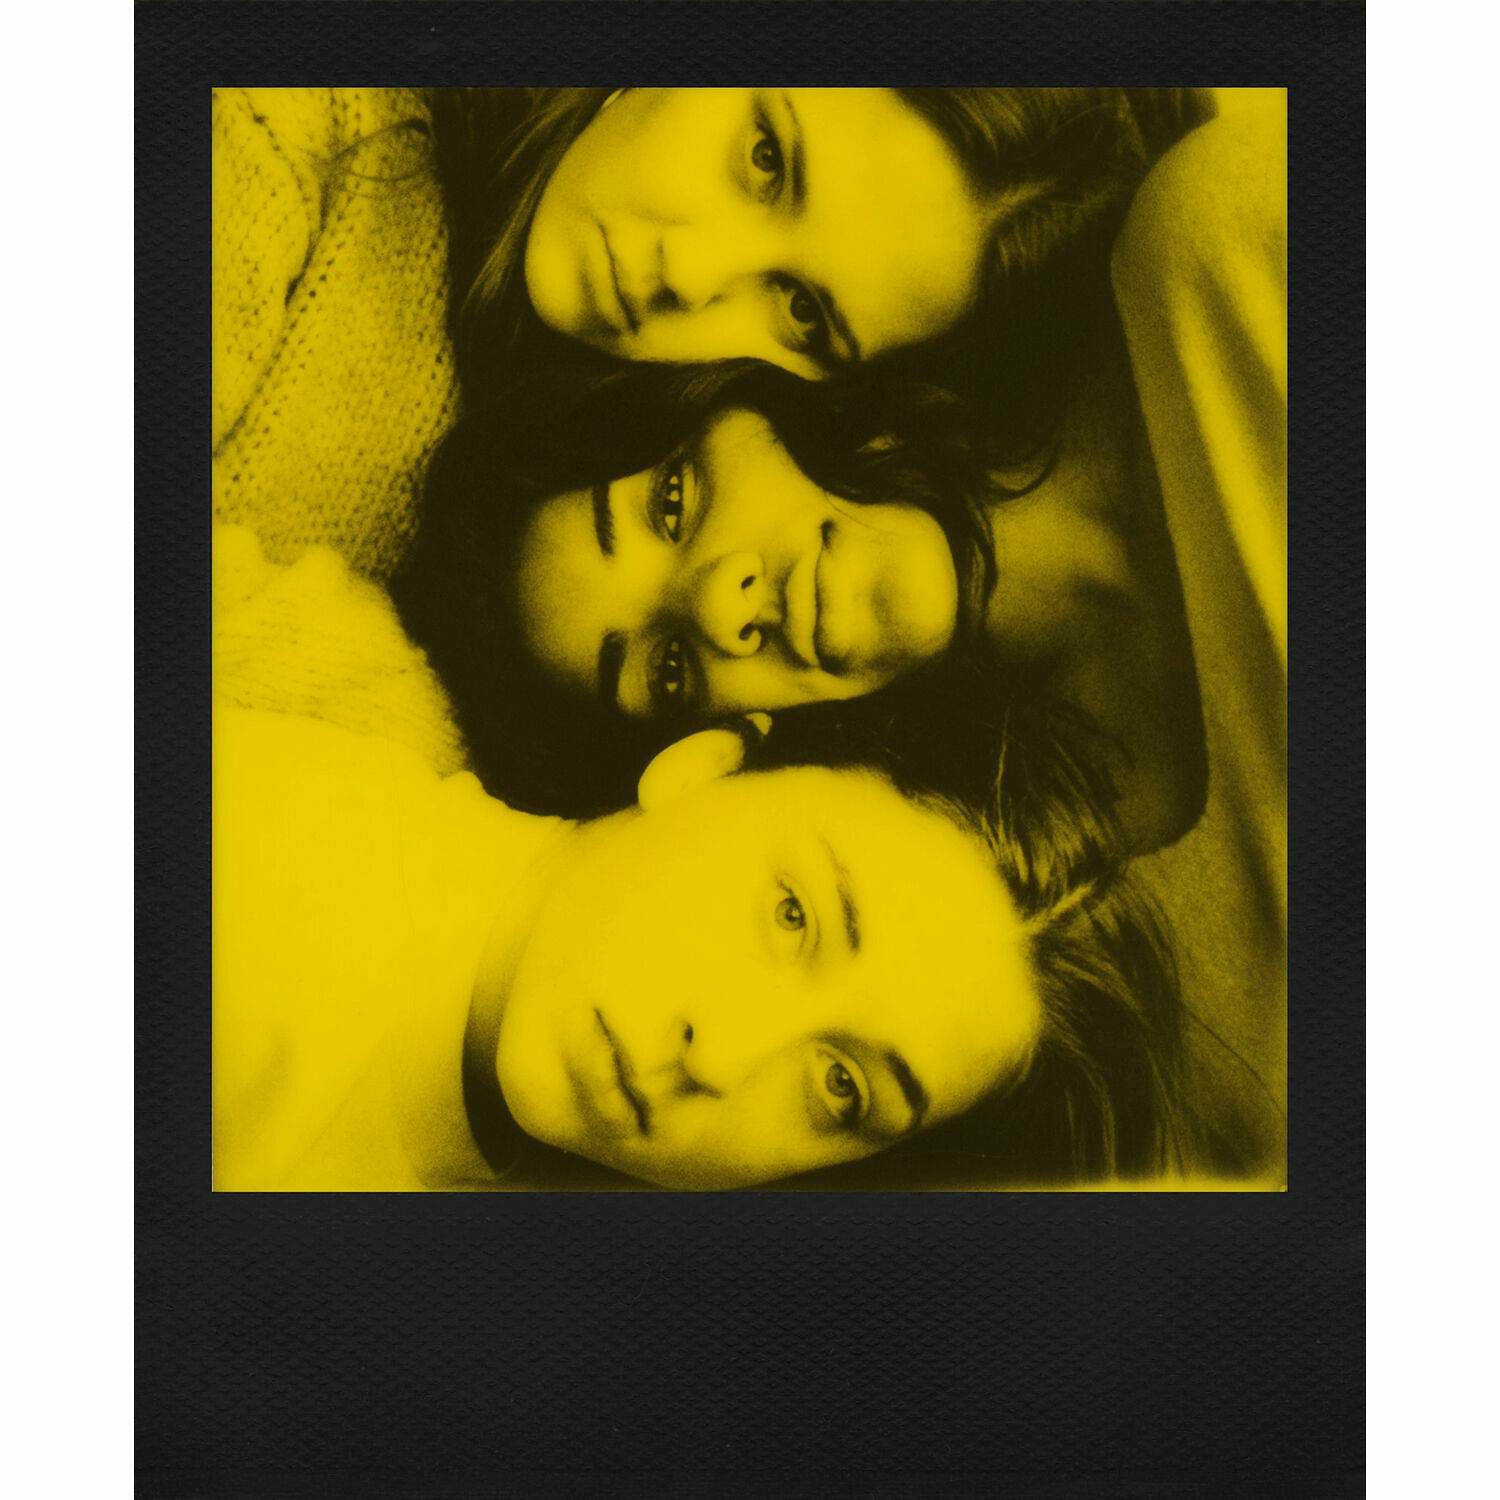 Polaroid Originals Duochrome film 600 Black & Yellow Edition foto papir za fotografije u boji za Instant fotoaparate (006022)